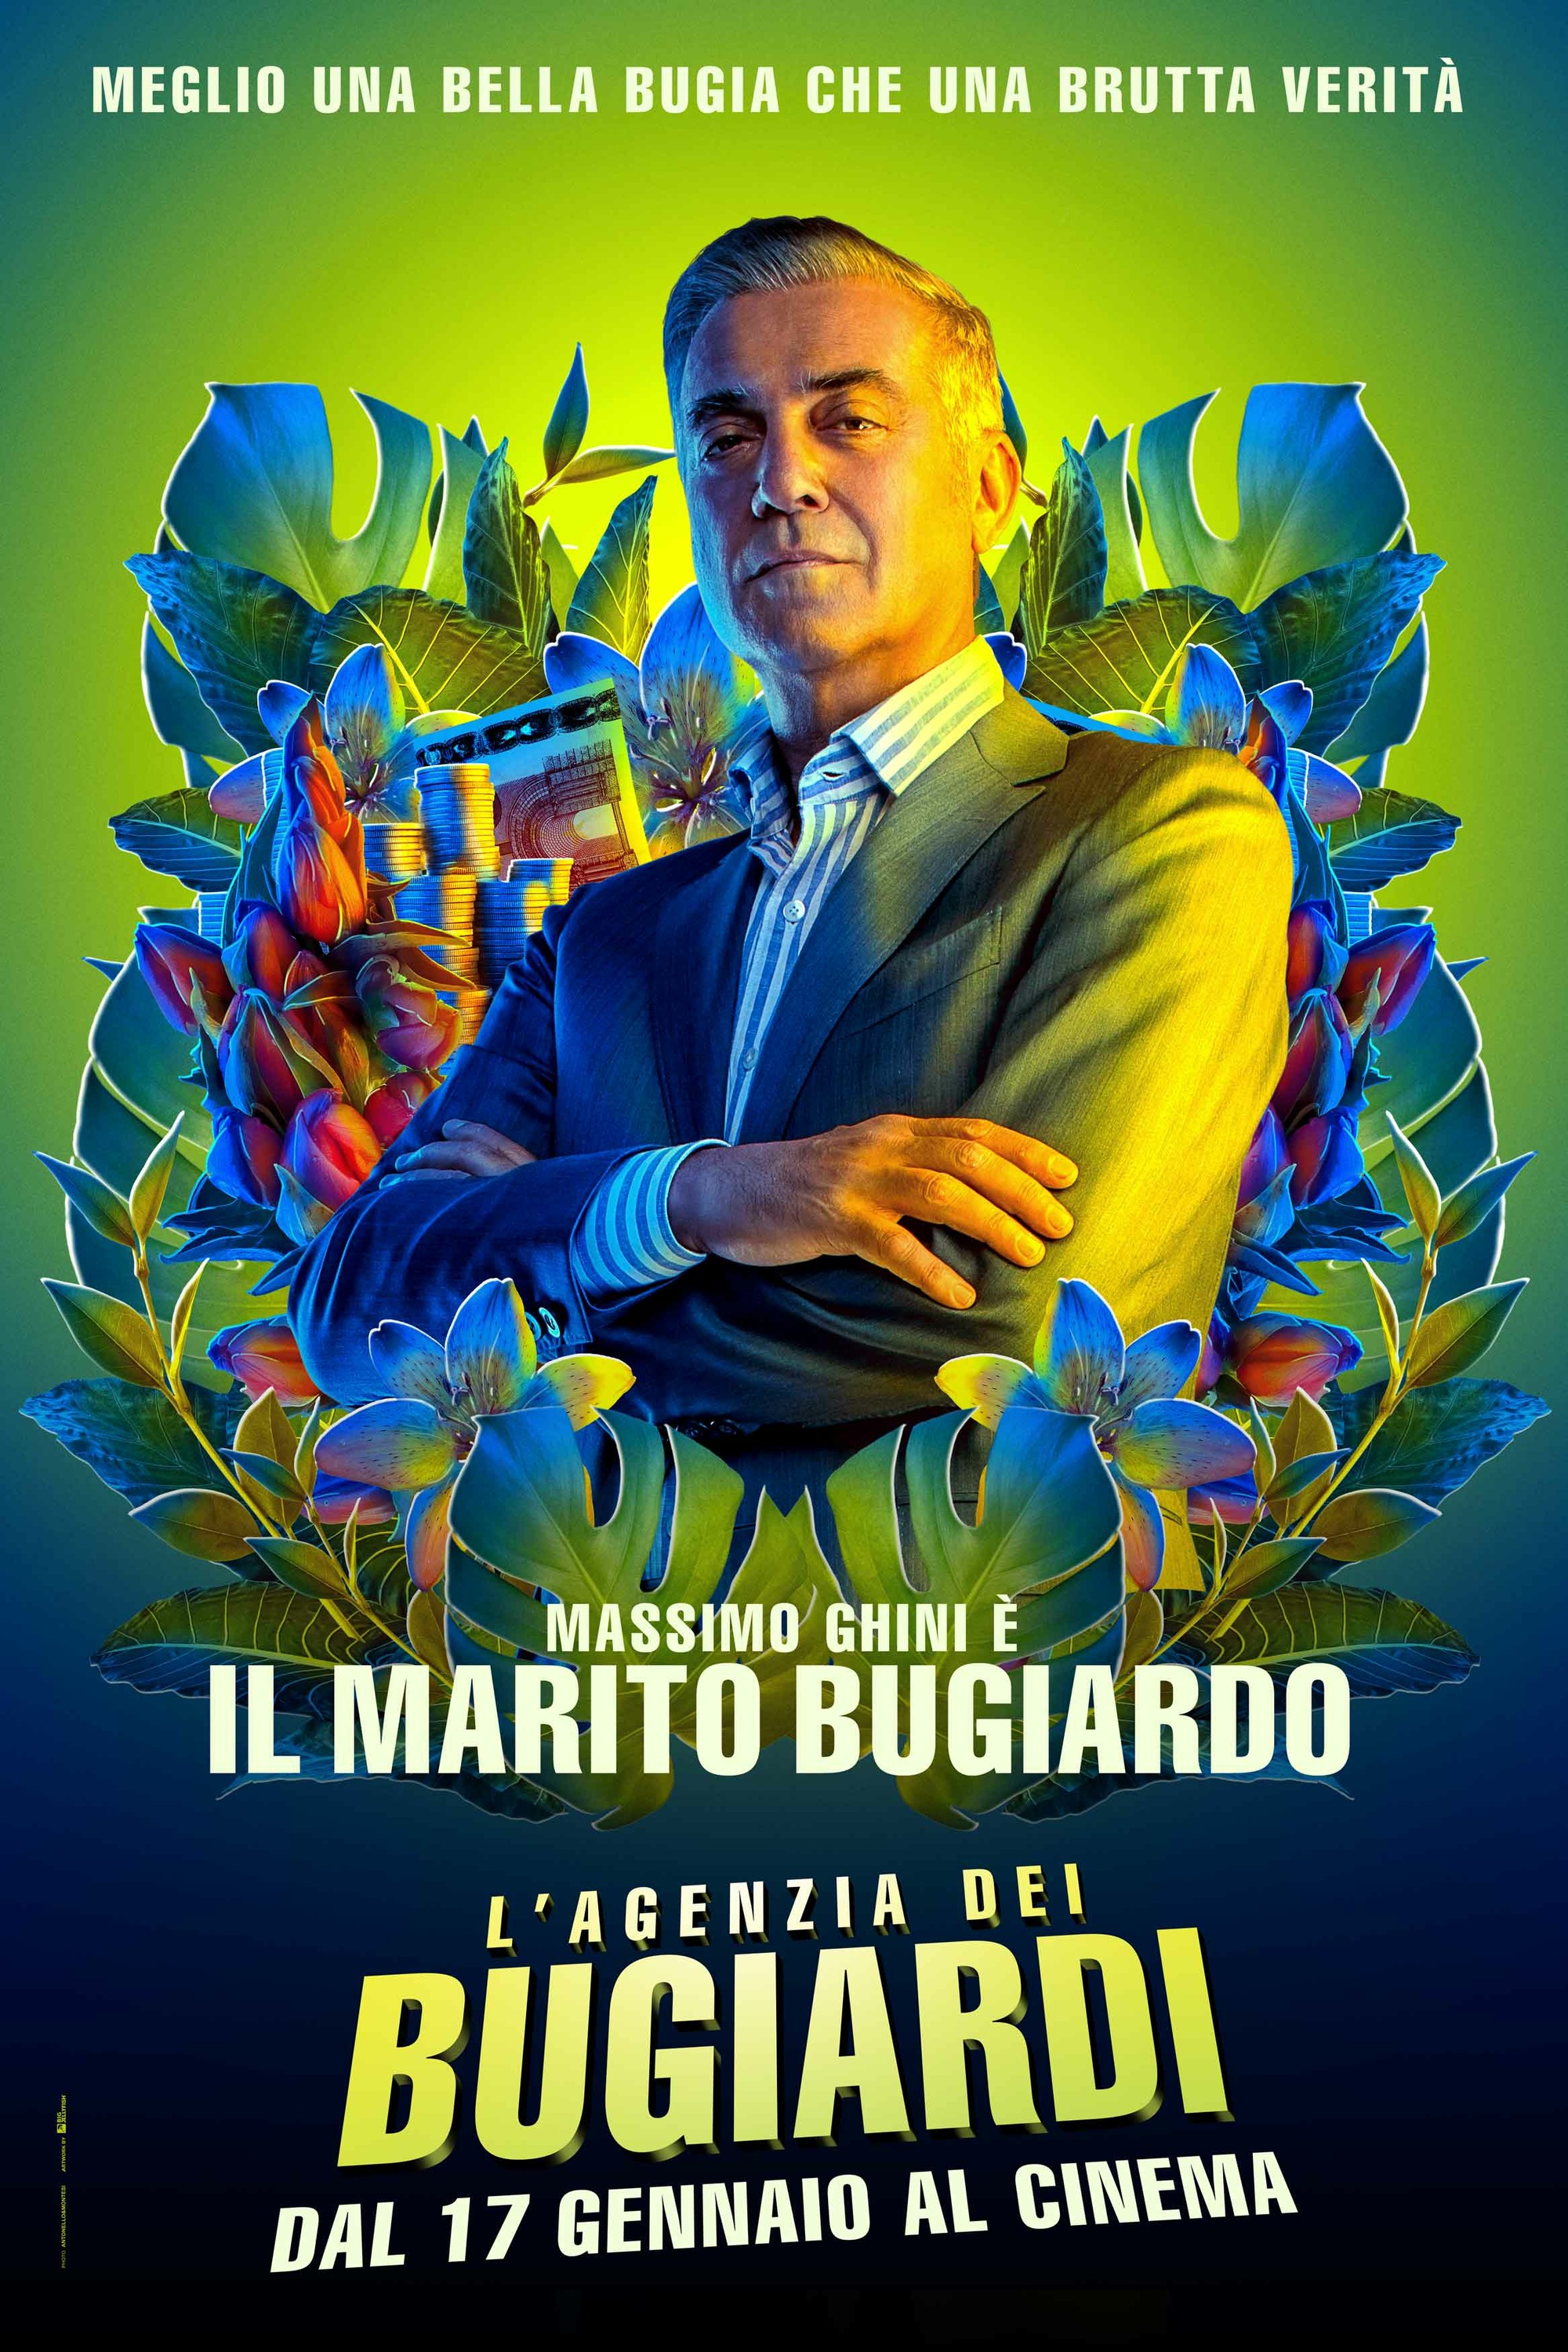 Mega Sized Movie Poster Image for L'agenzia dei bugiardi (#3 of 7)